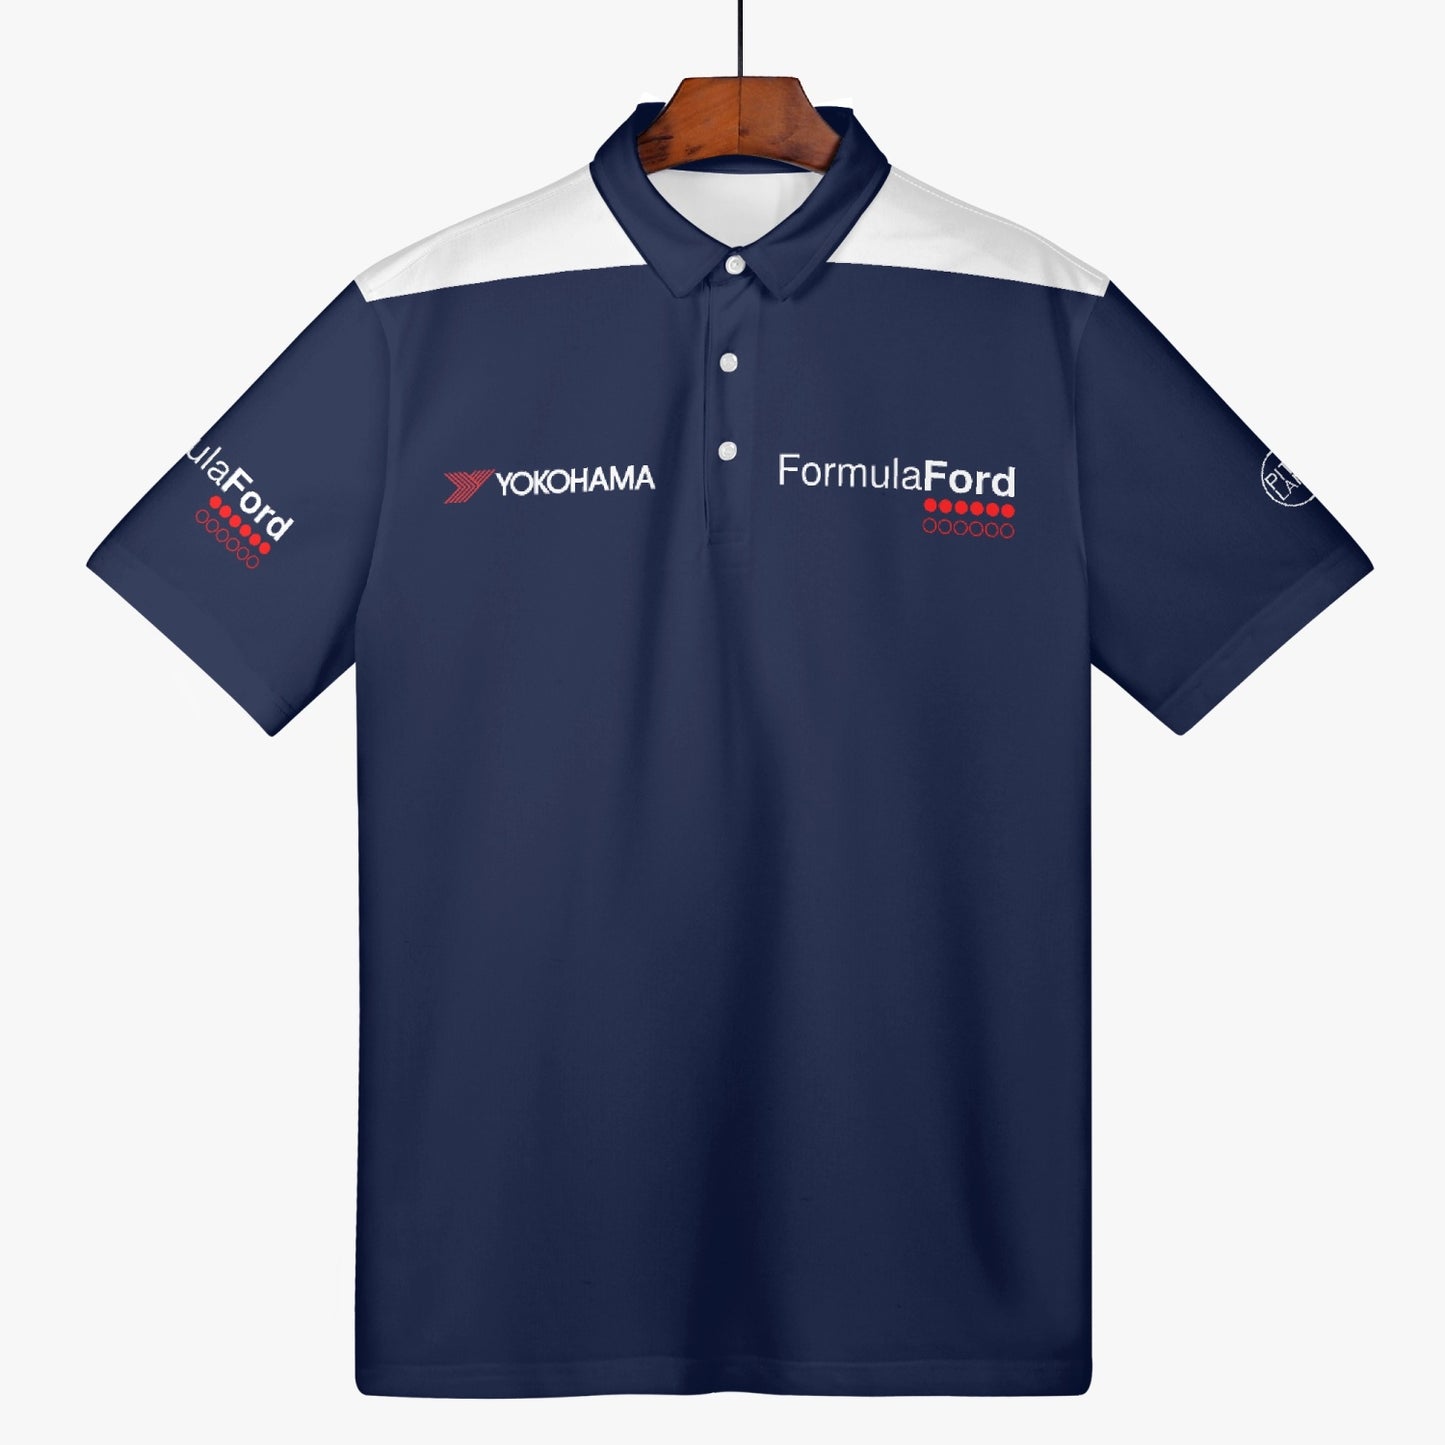 FORMULA FORD Official Handmade Polo Shirt - Navy